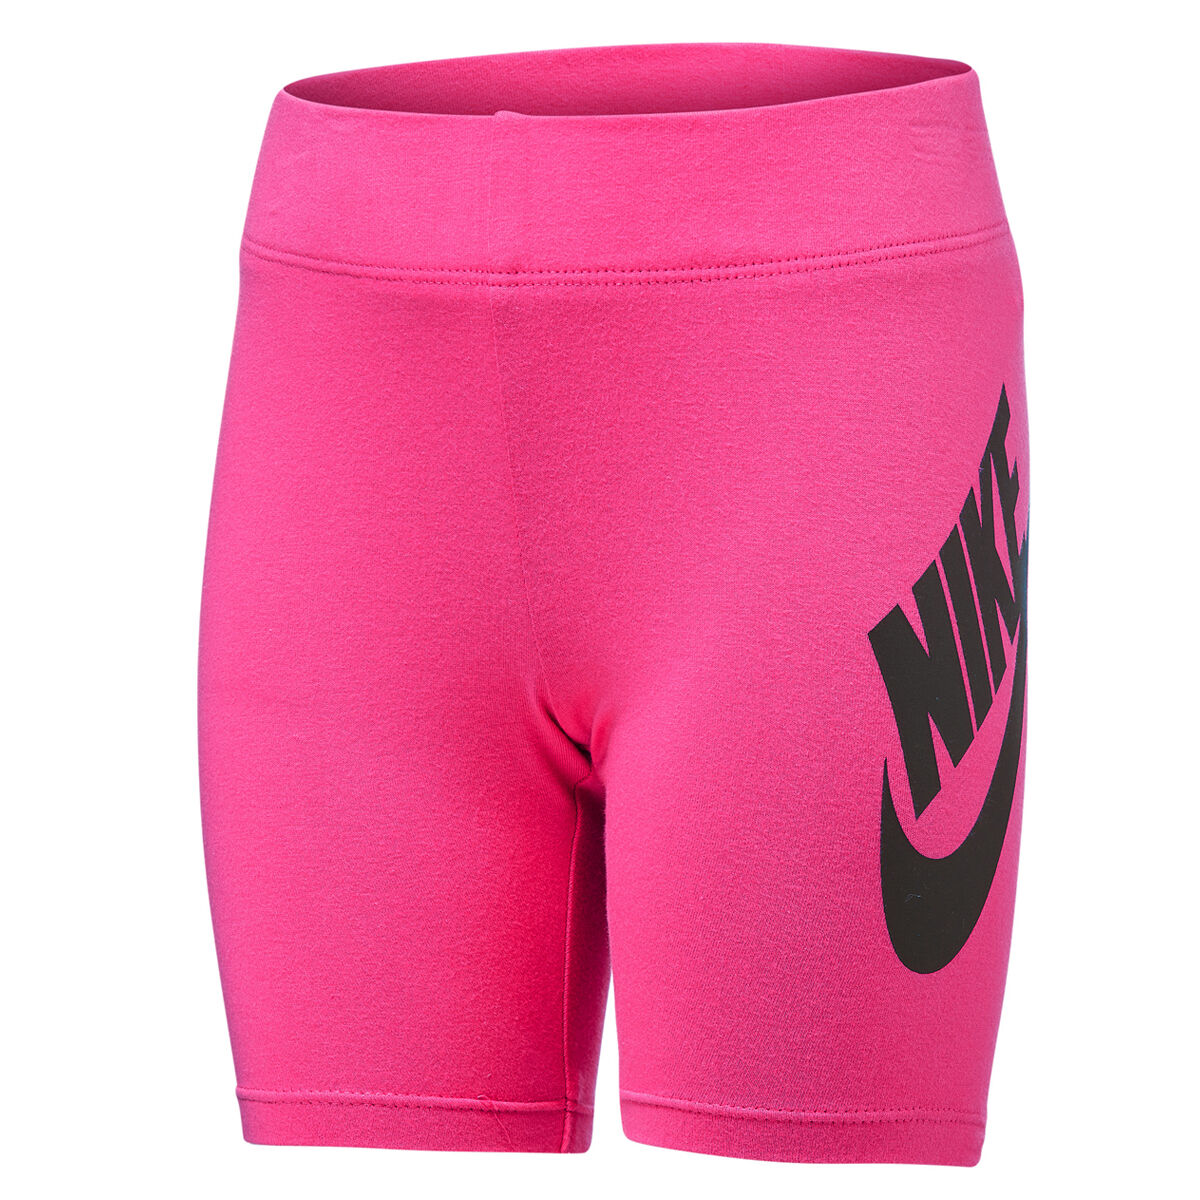 nike pink and black shorts